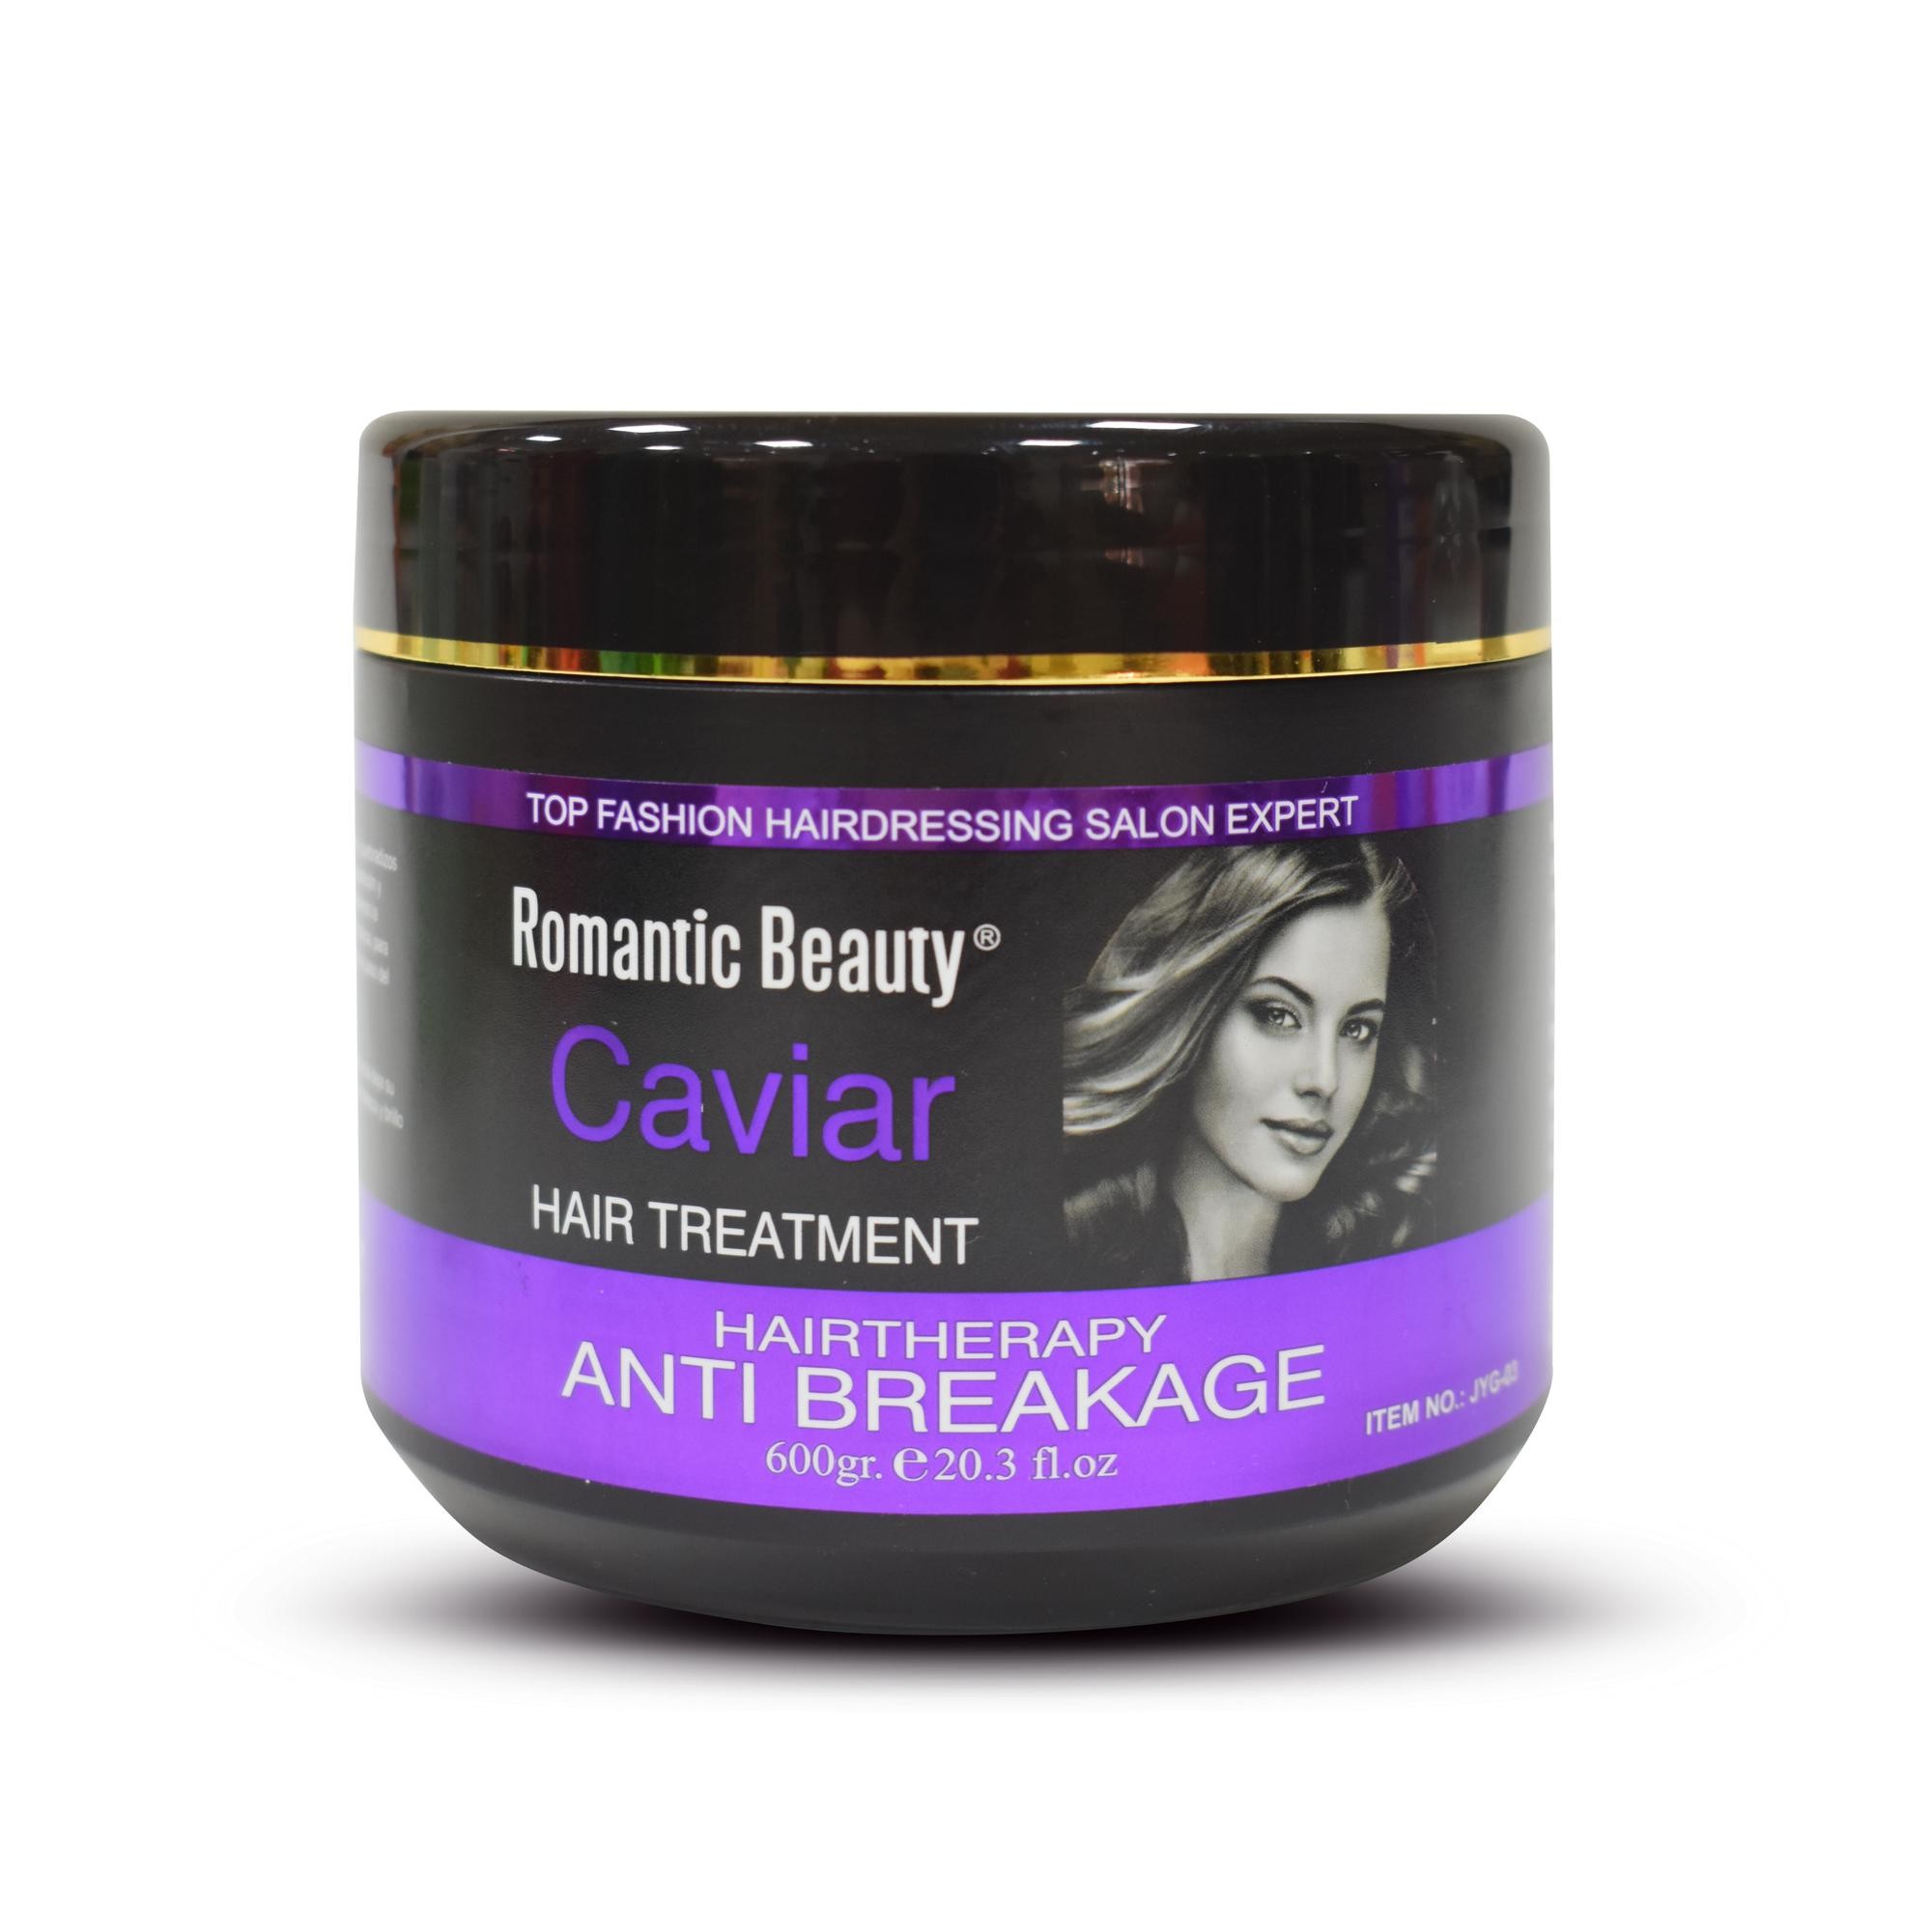 HAIRTHERAPY Caviar Hair Treatment  anti breakage. 600GR